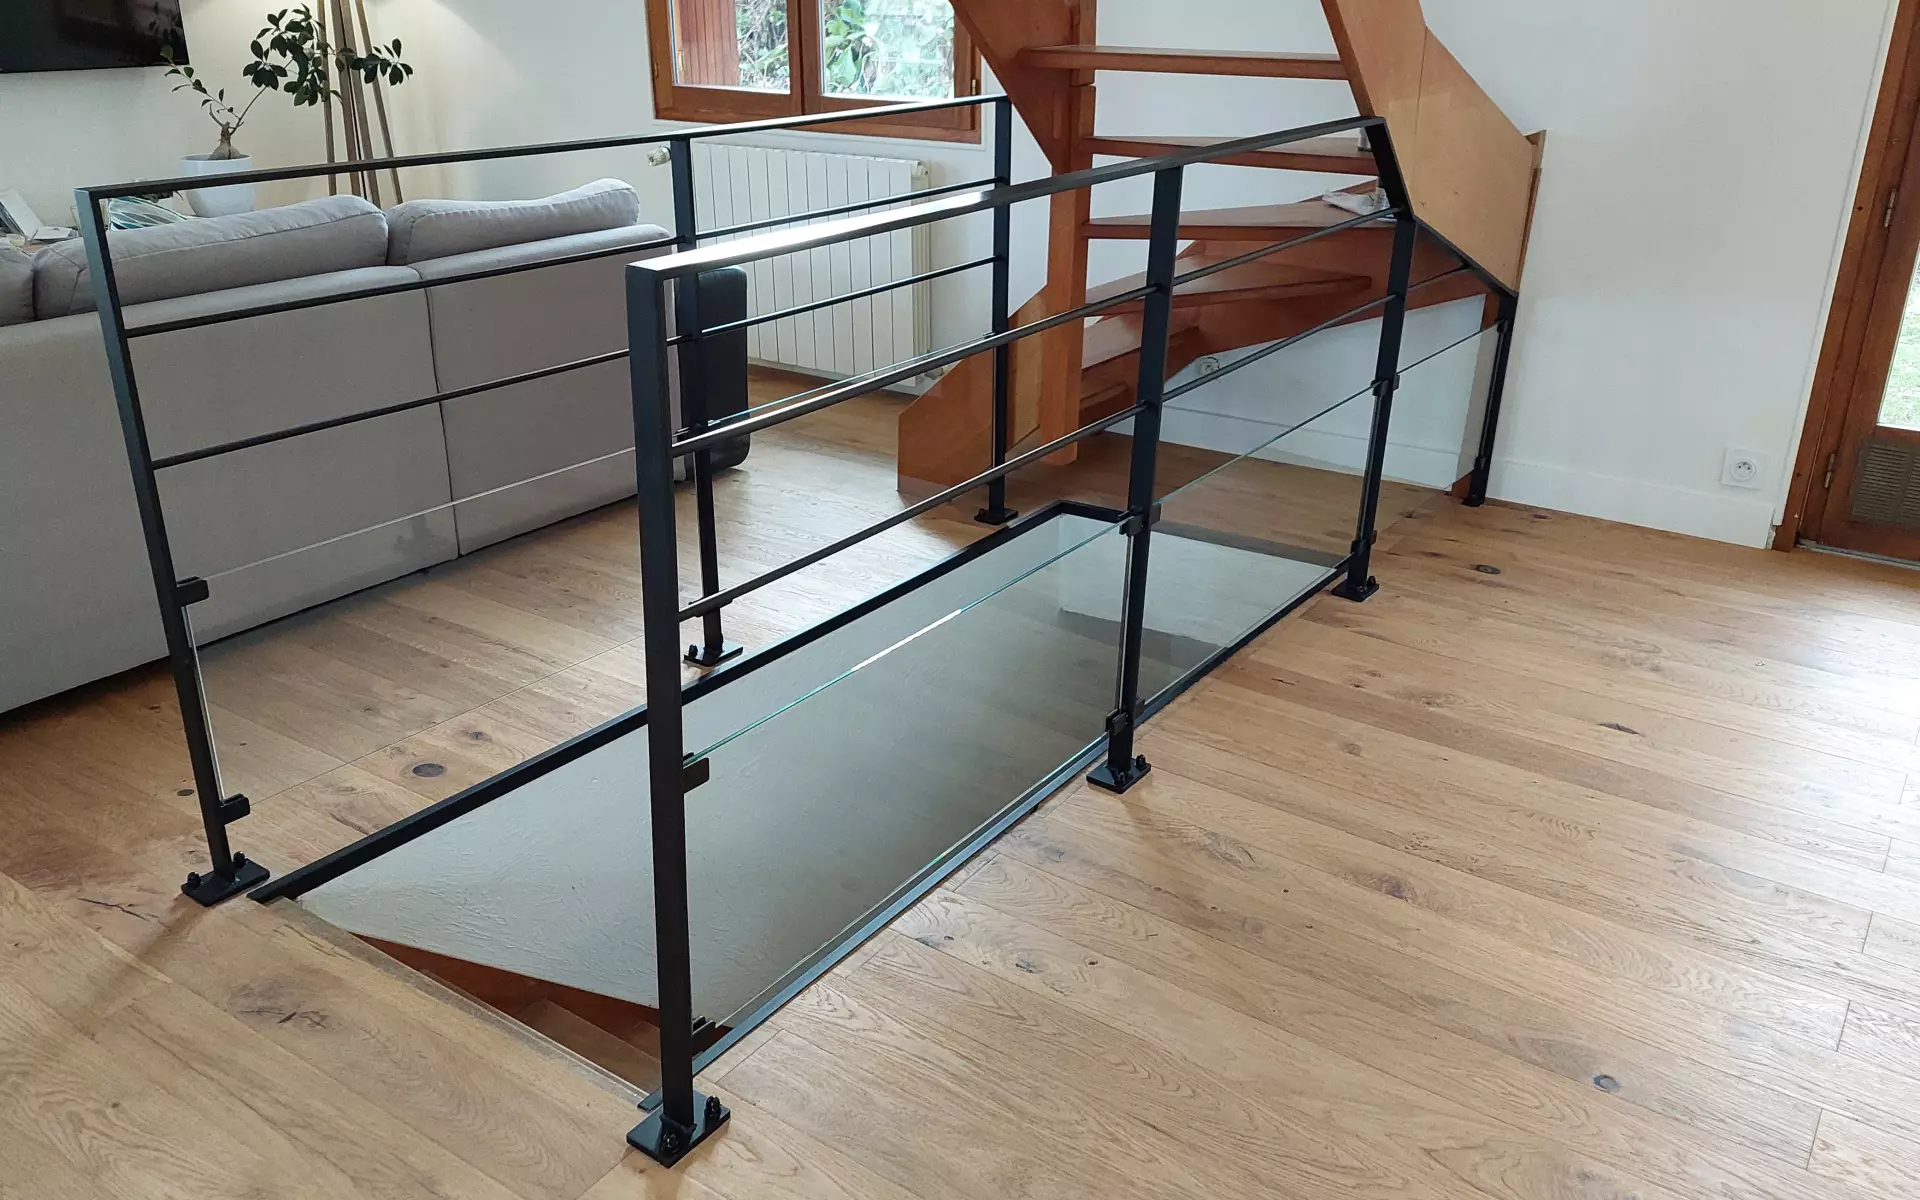 barriere-balustrade-garde-fou-main-courante-rampe-escalier-acier-metal-rambarde